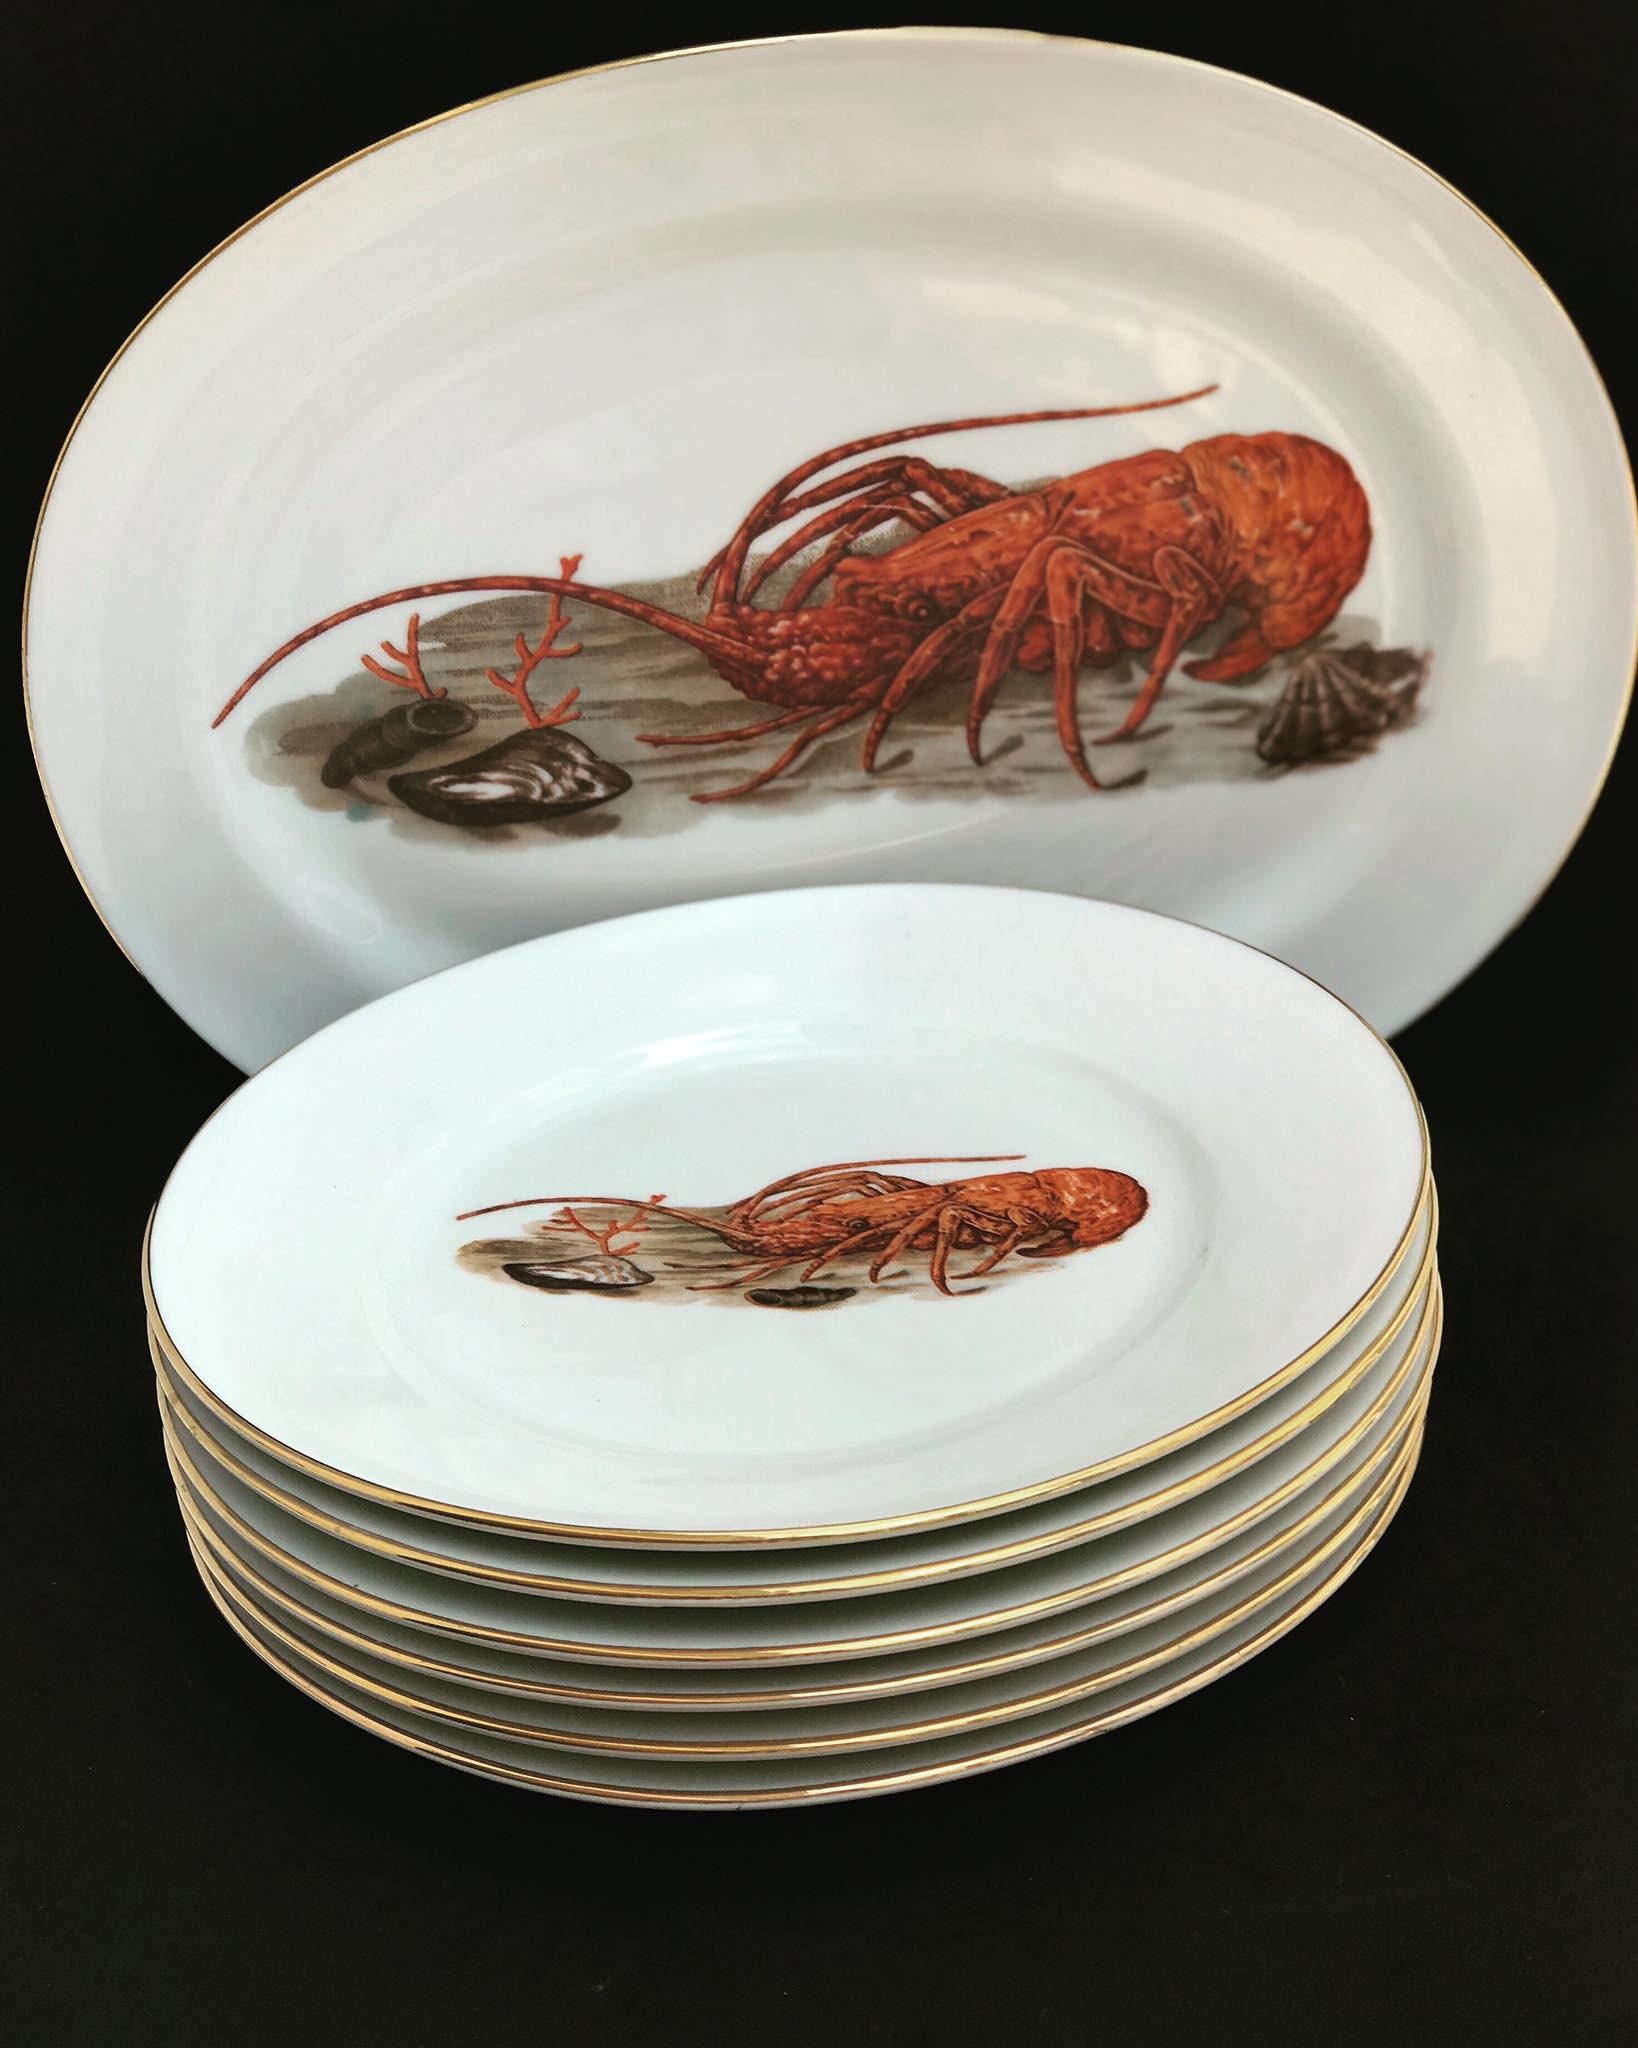 Lobster Plates Dish Set Plates Seafood Serving Plate Vintage Italy Porcelain Orange Decor Wedding Gift Transfert Decoration For Her